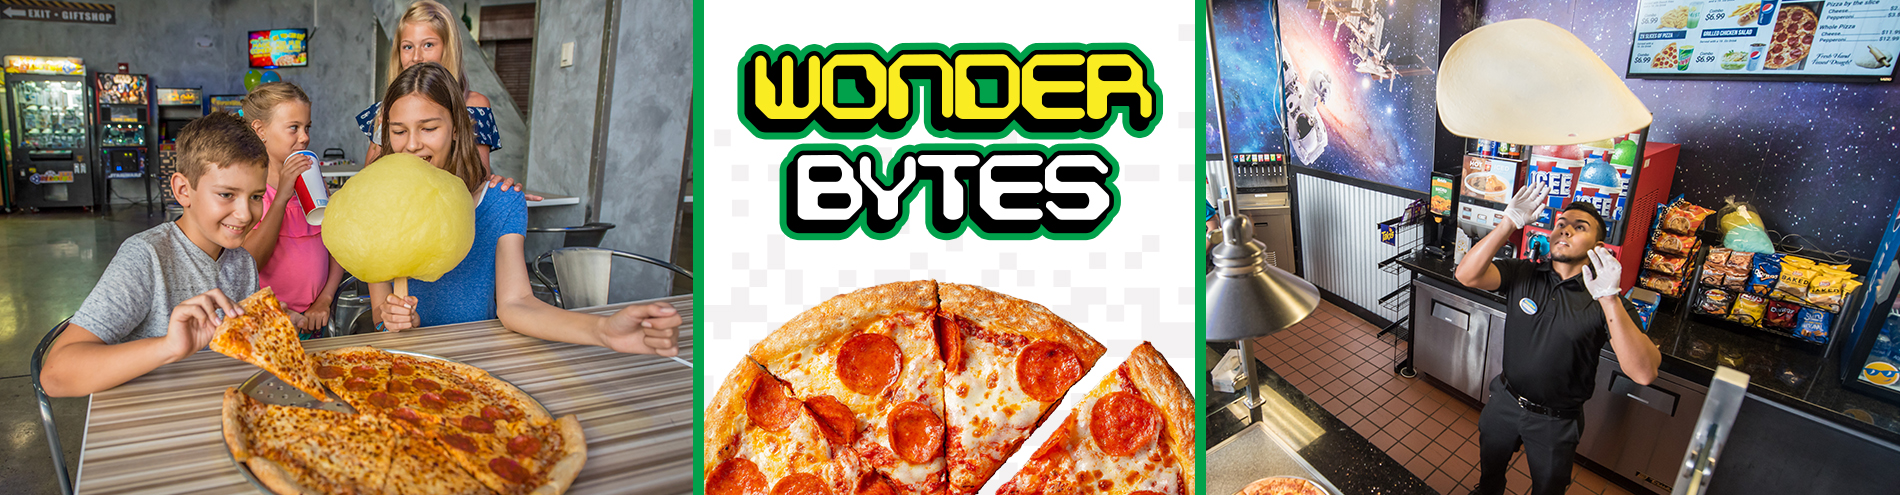 Wonder Bytes Web Slider